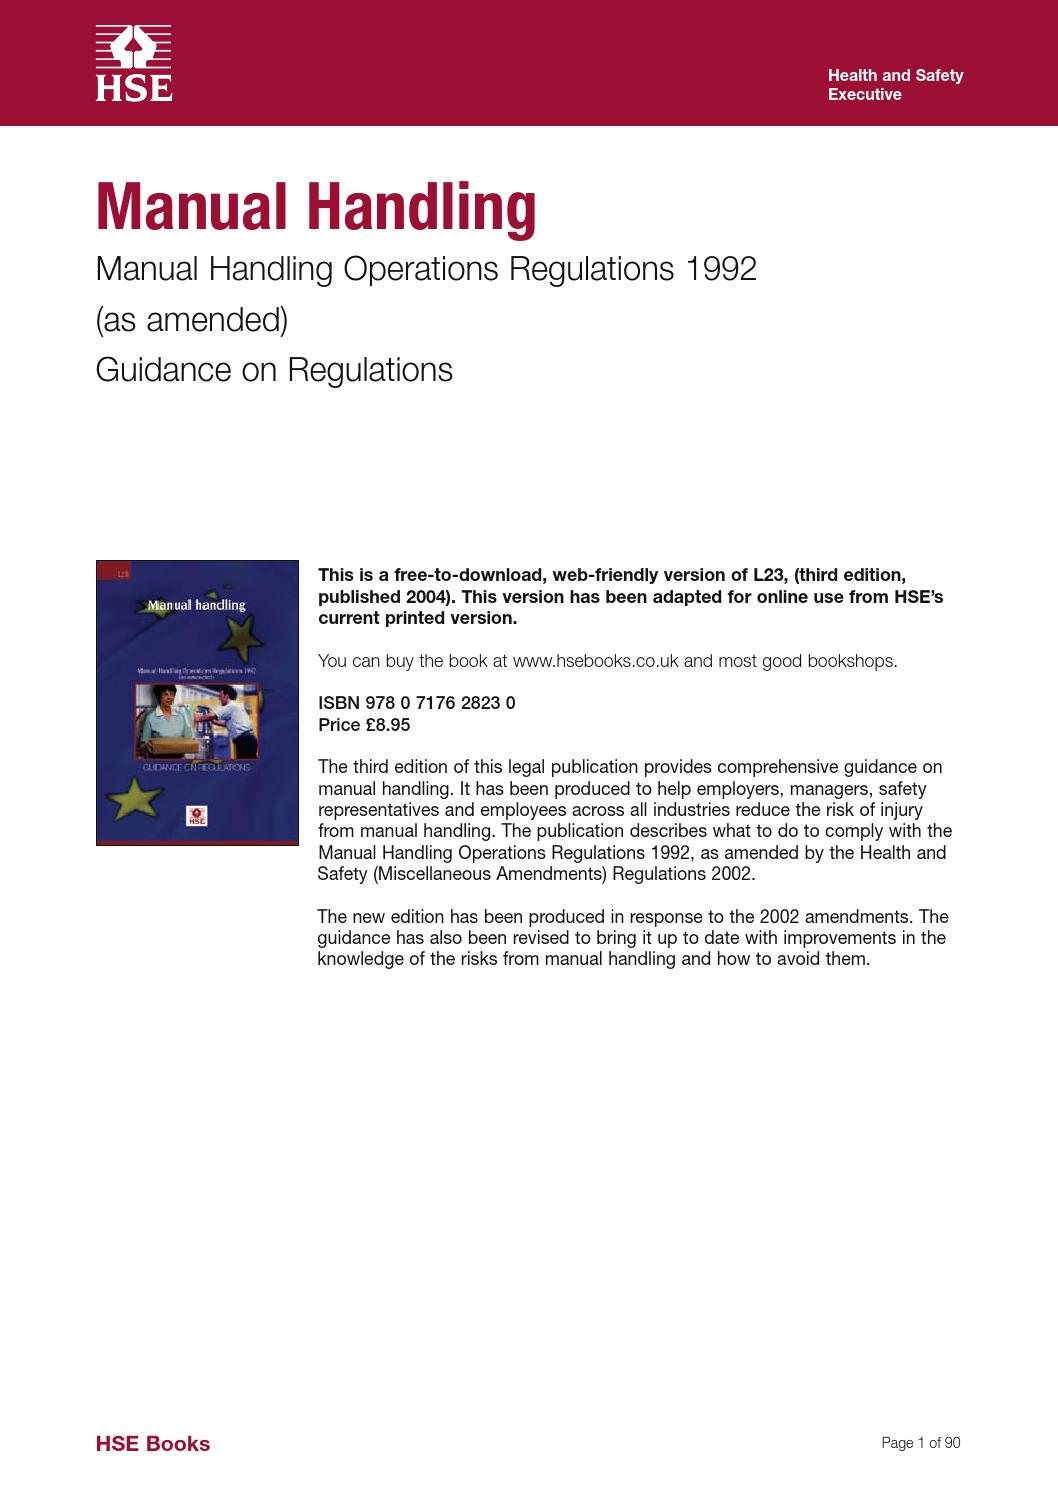 The Manual Handling Operations Regulations